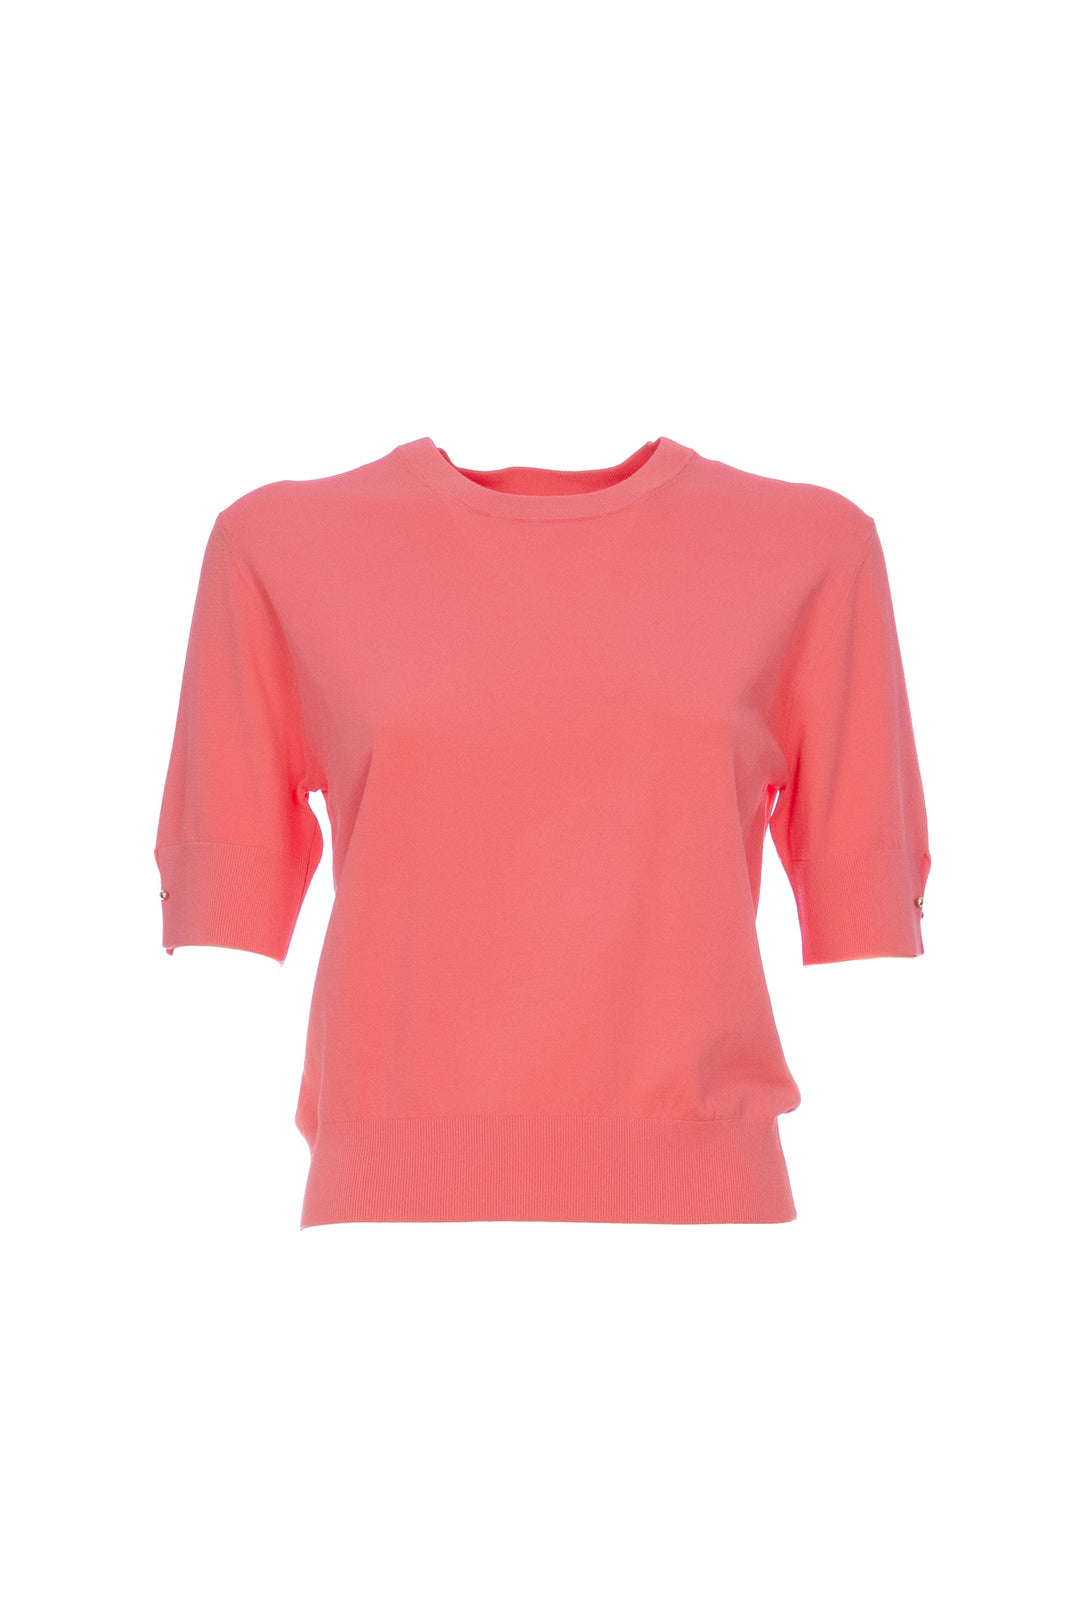 KAOS T-shirt girocollo corallo in maglia - Mancinelli 1954